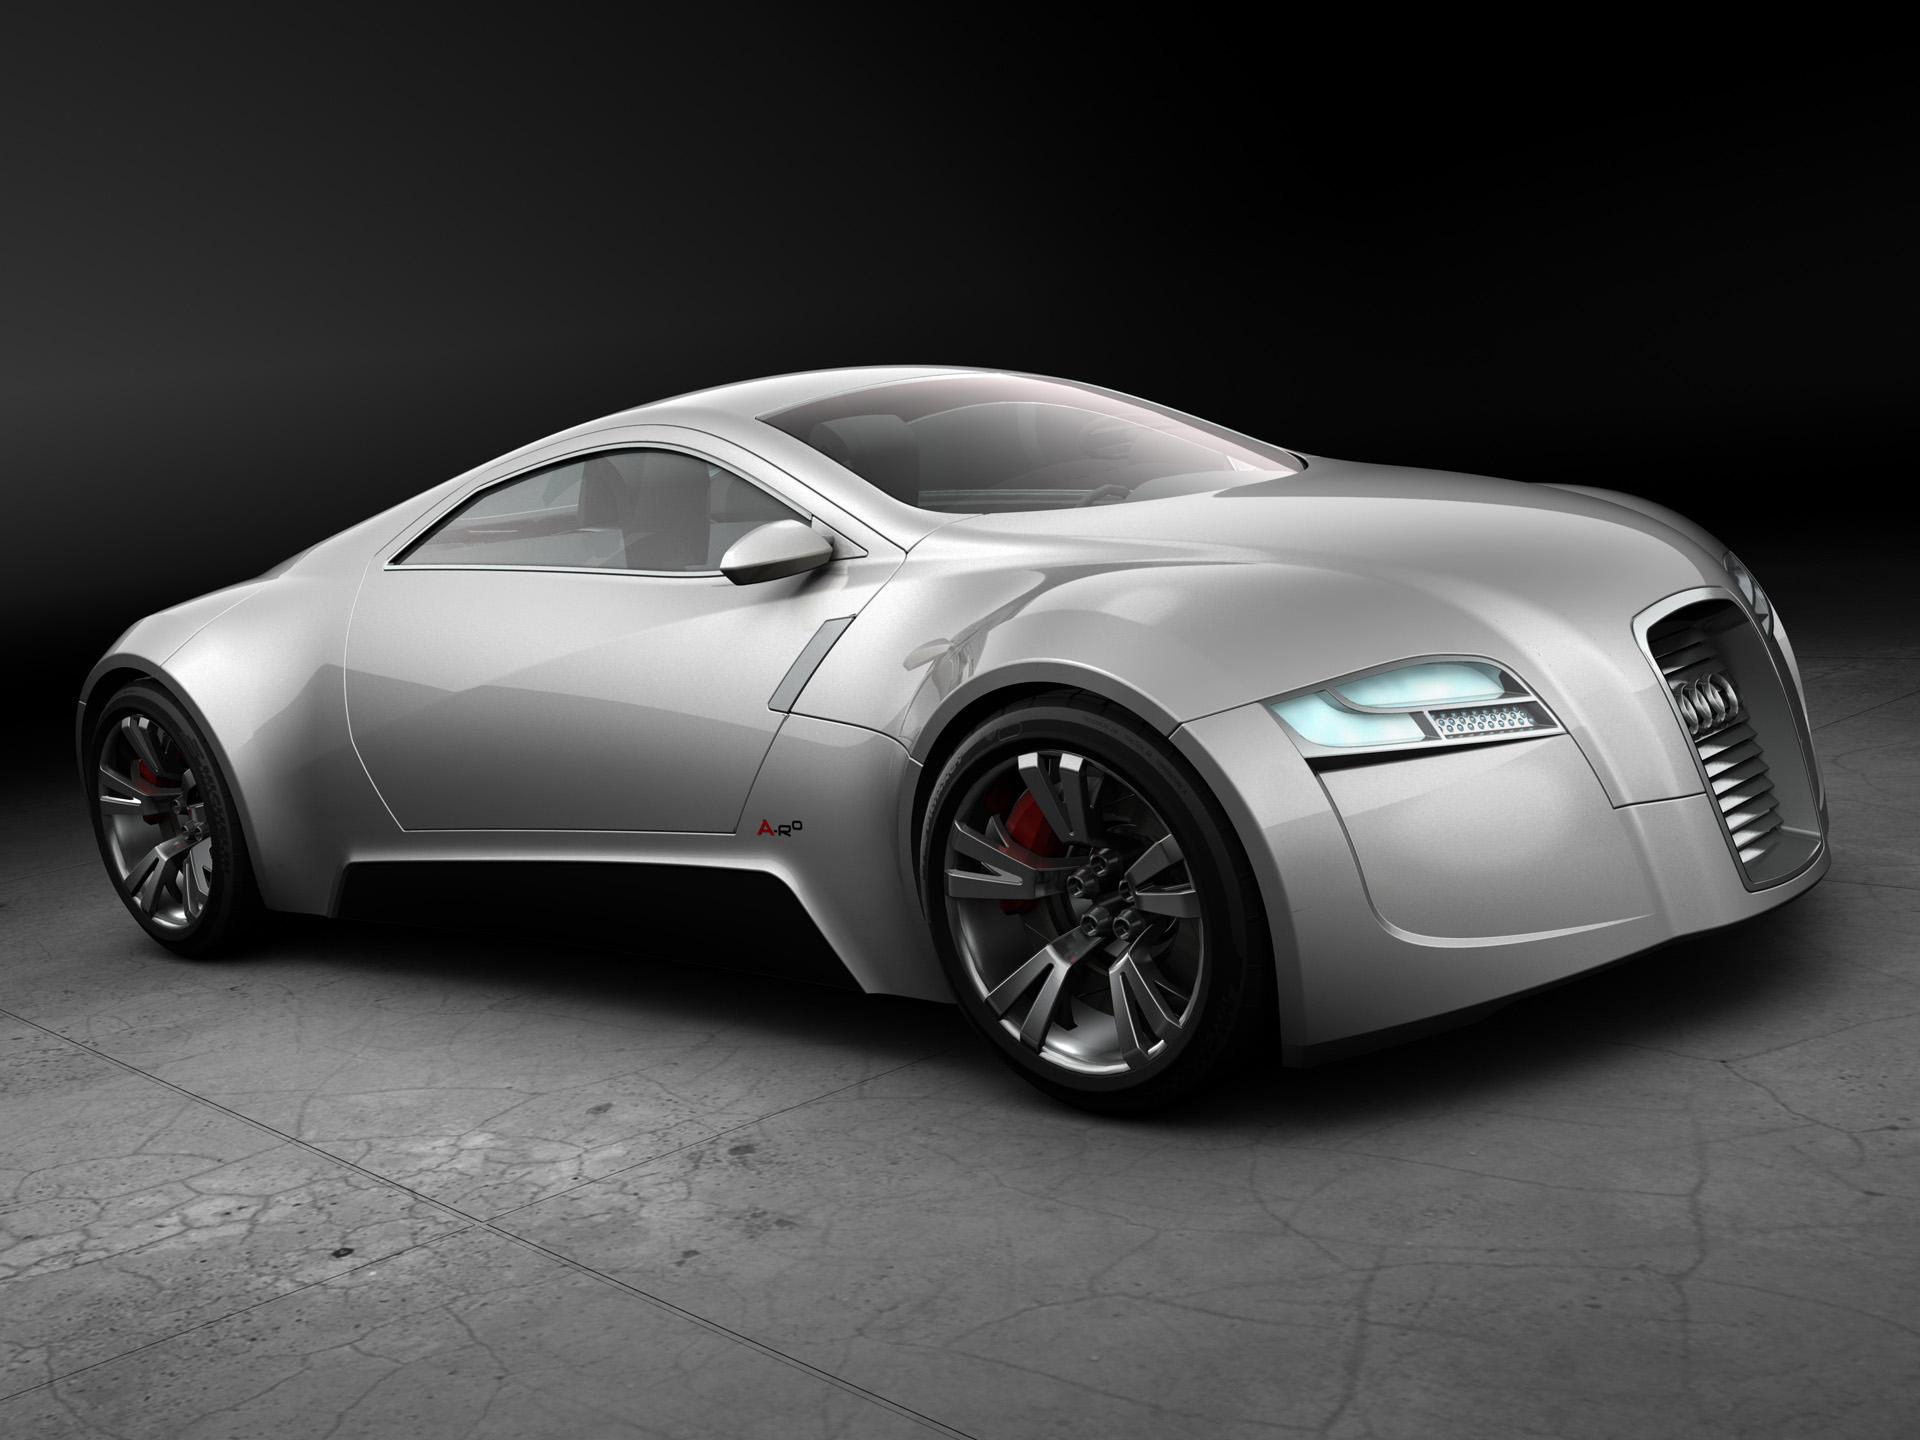 Audi Super Concept Car - Wallpaper, High Definition, High ...